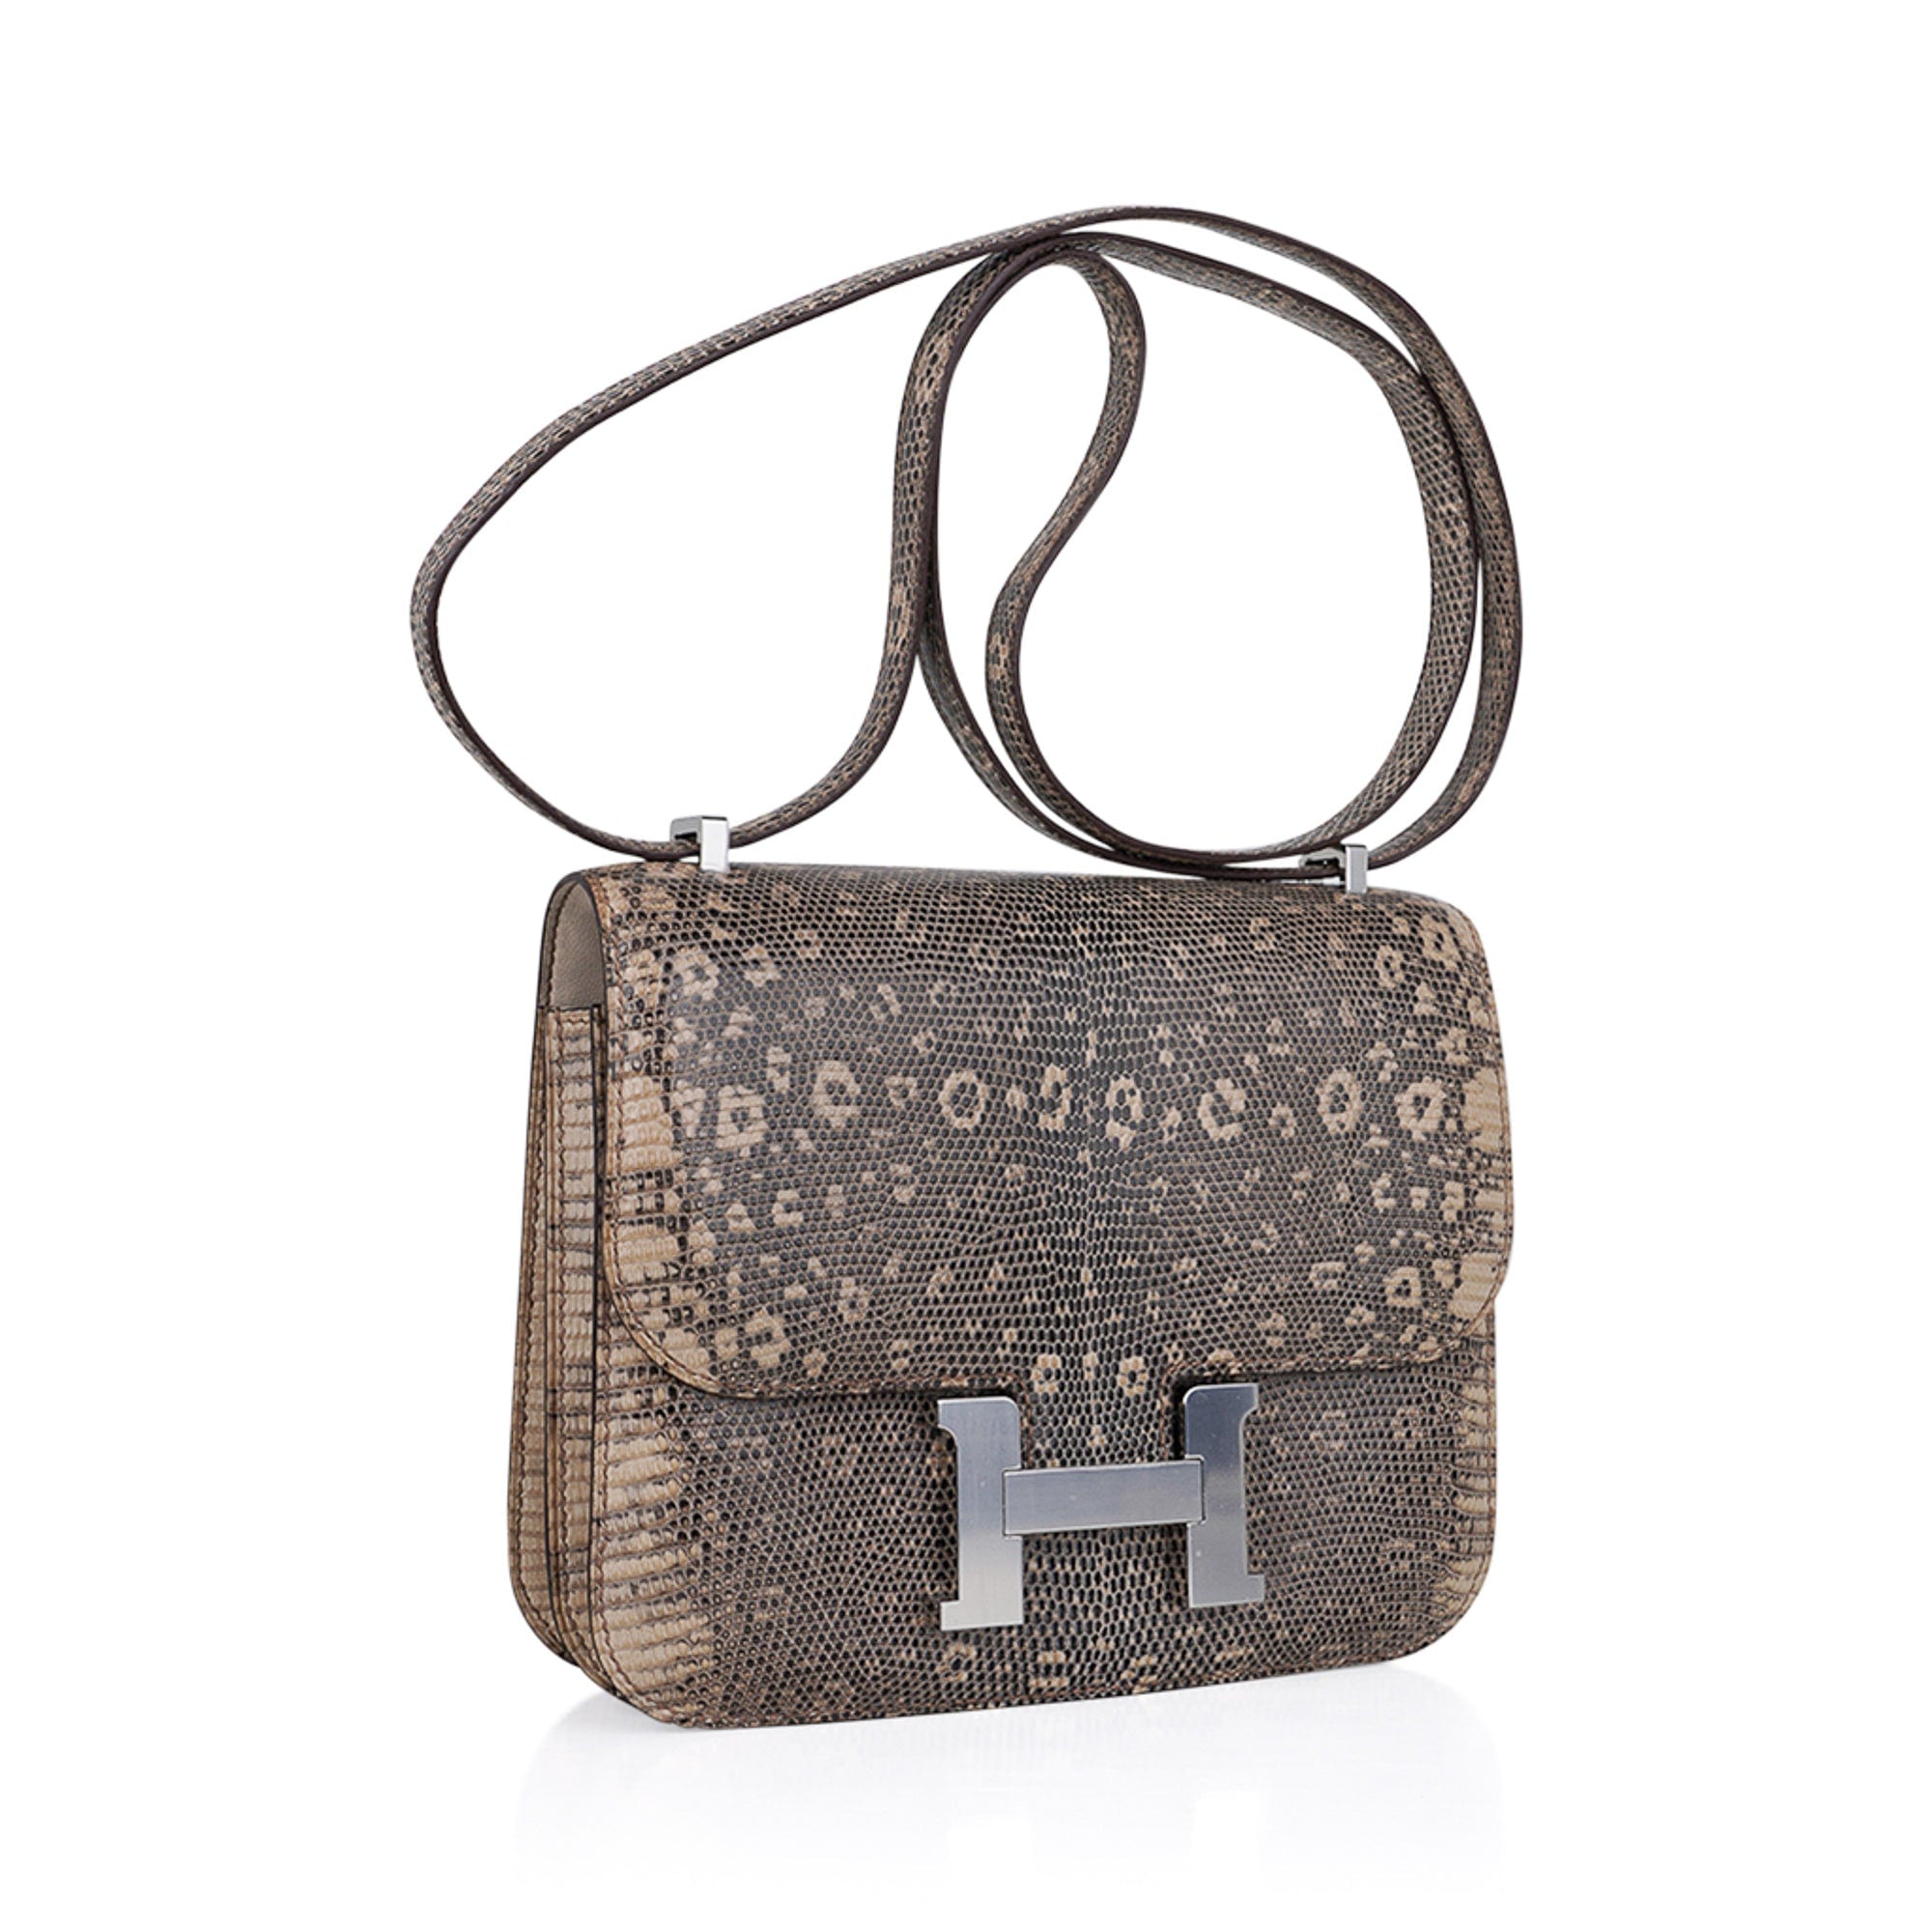 Louis Vuitton LV Hermes Chloe Gucci gift box for belt wallet